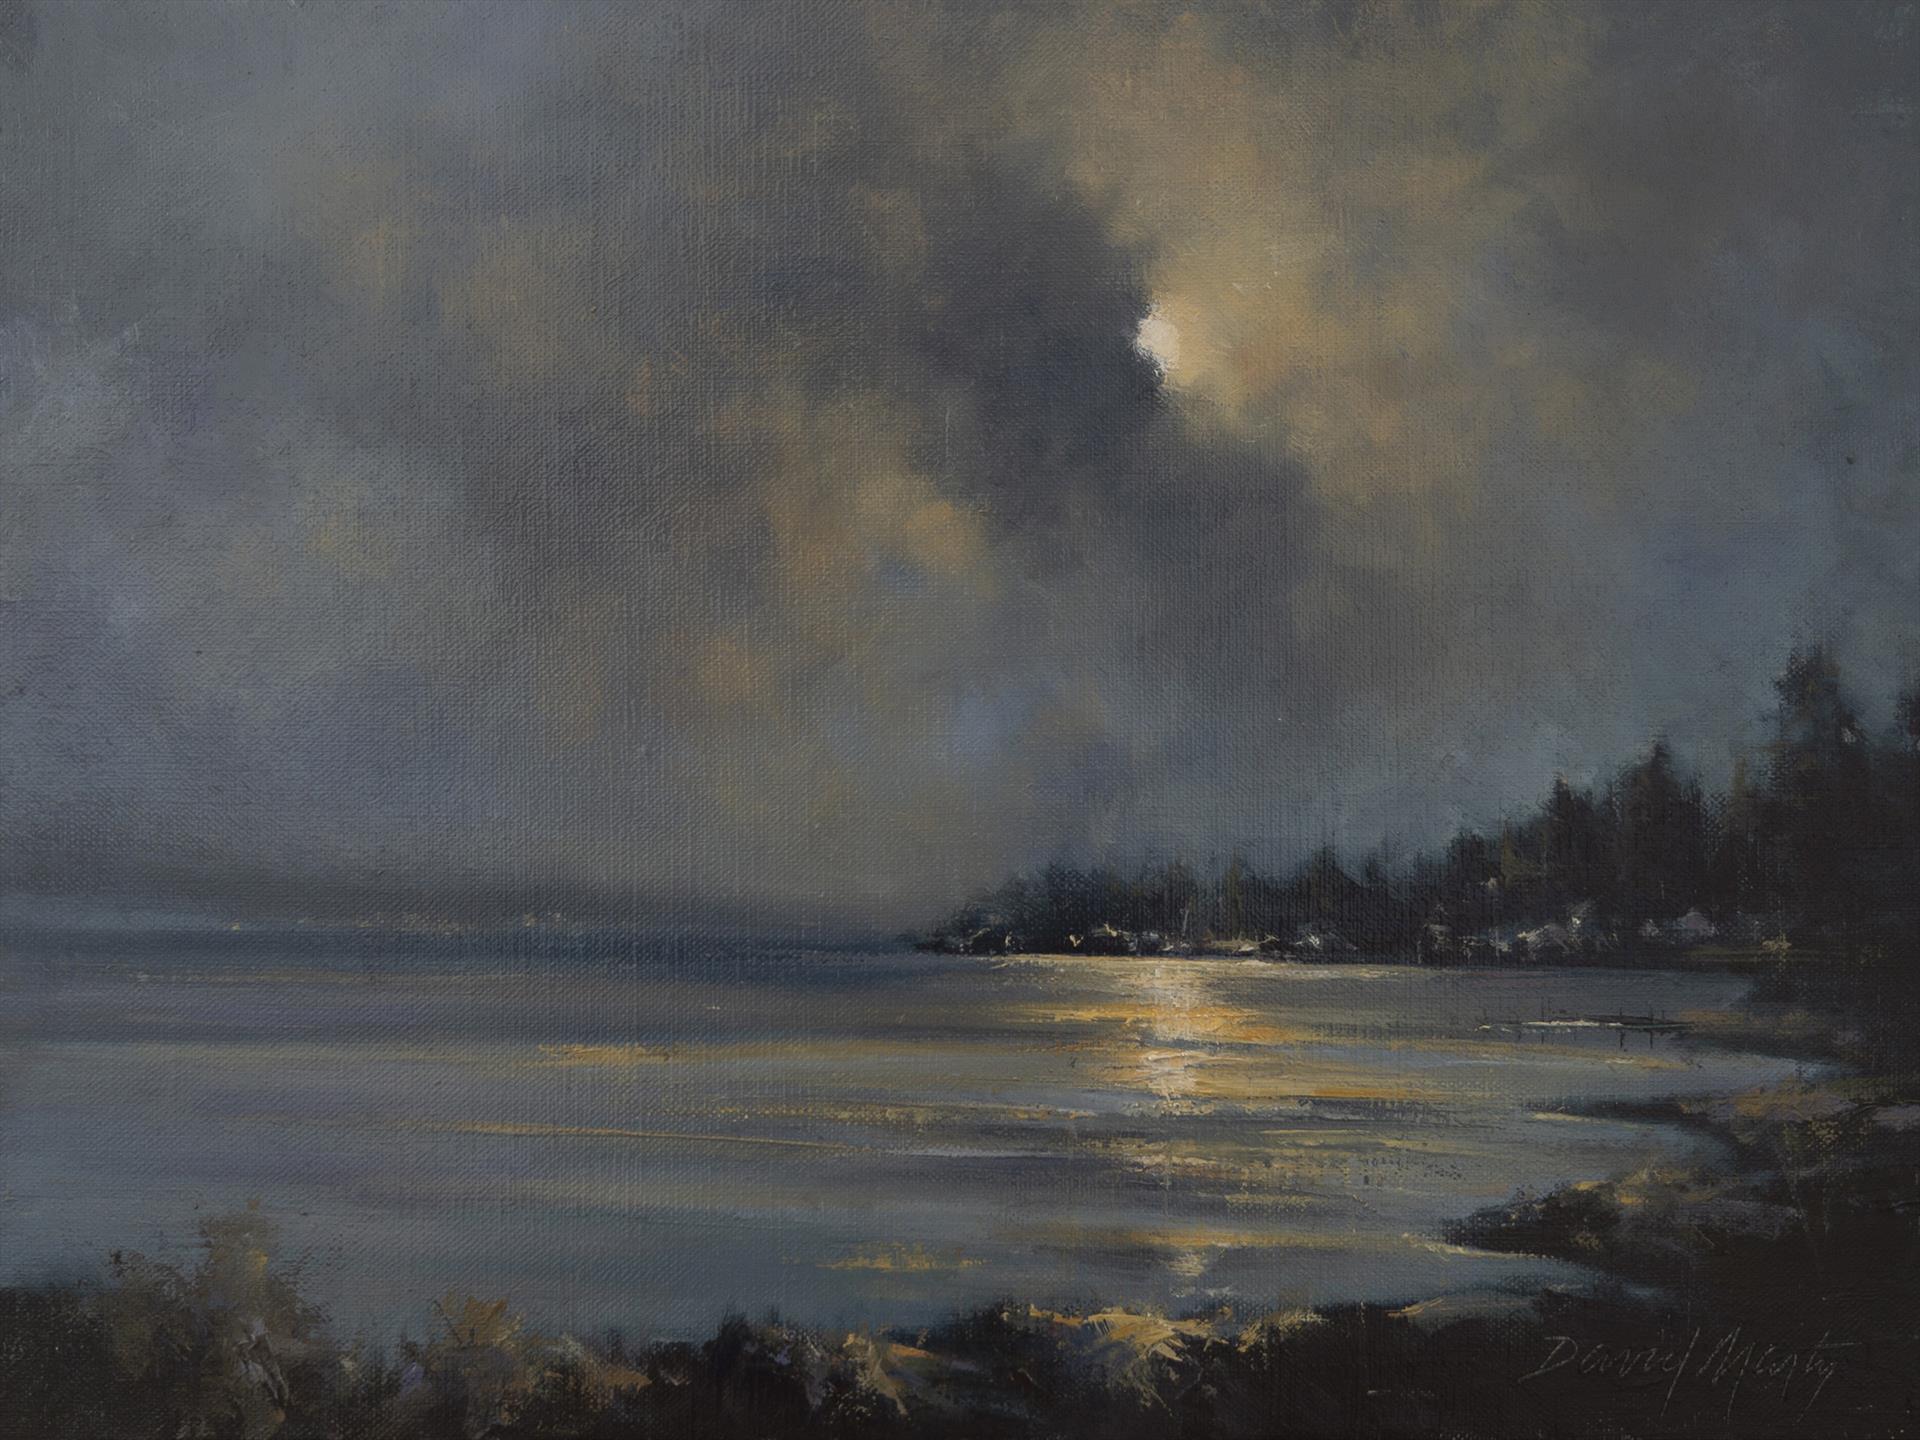 LPAPA - David Marty, "Evening Serenity," oil, 12 x 16 in.